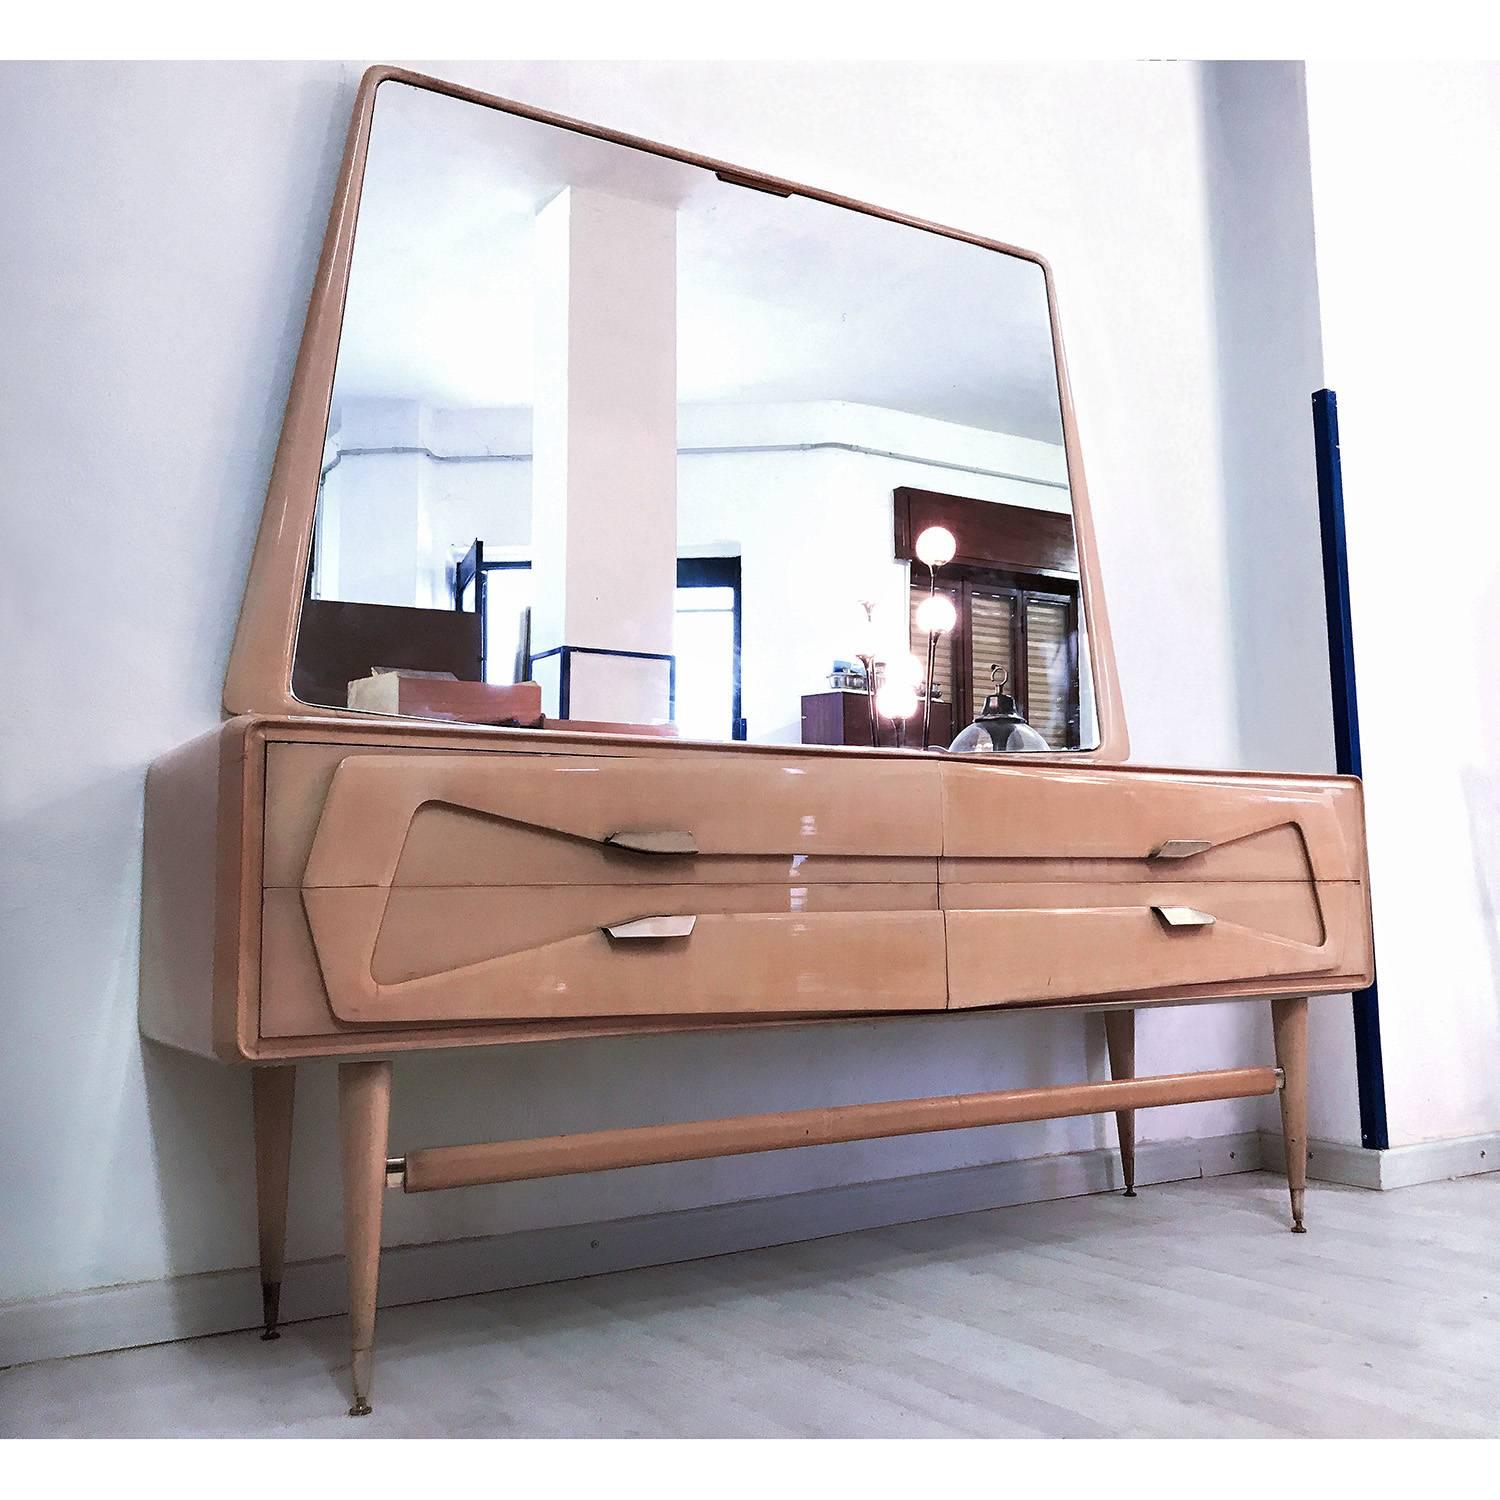 Mid-20th Century Italian Maple Dresser with Mirror attributed to Silvio Cavatorta, 1950s